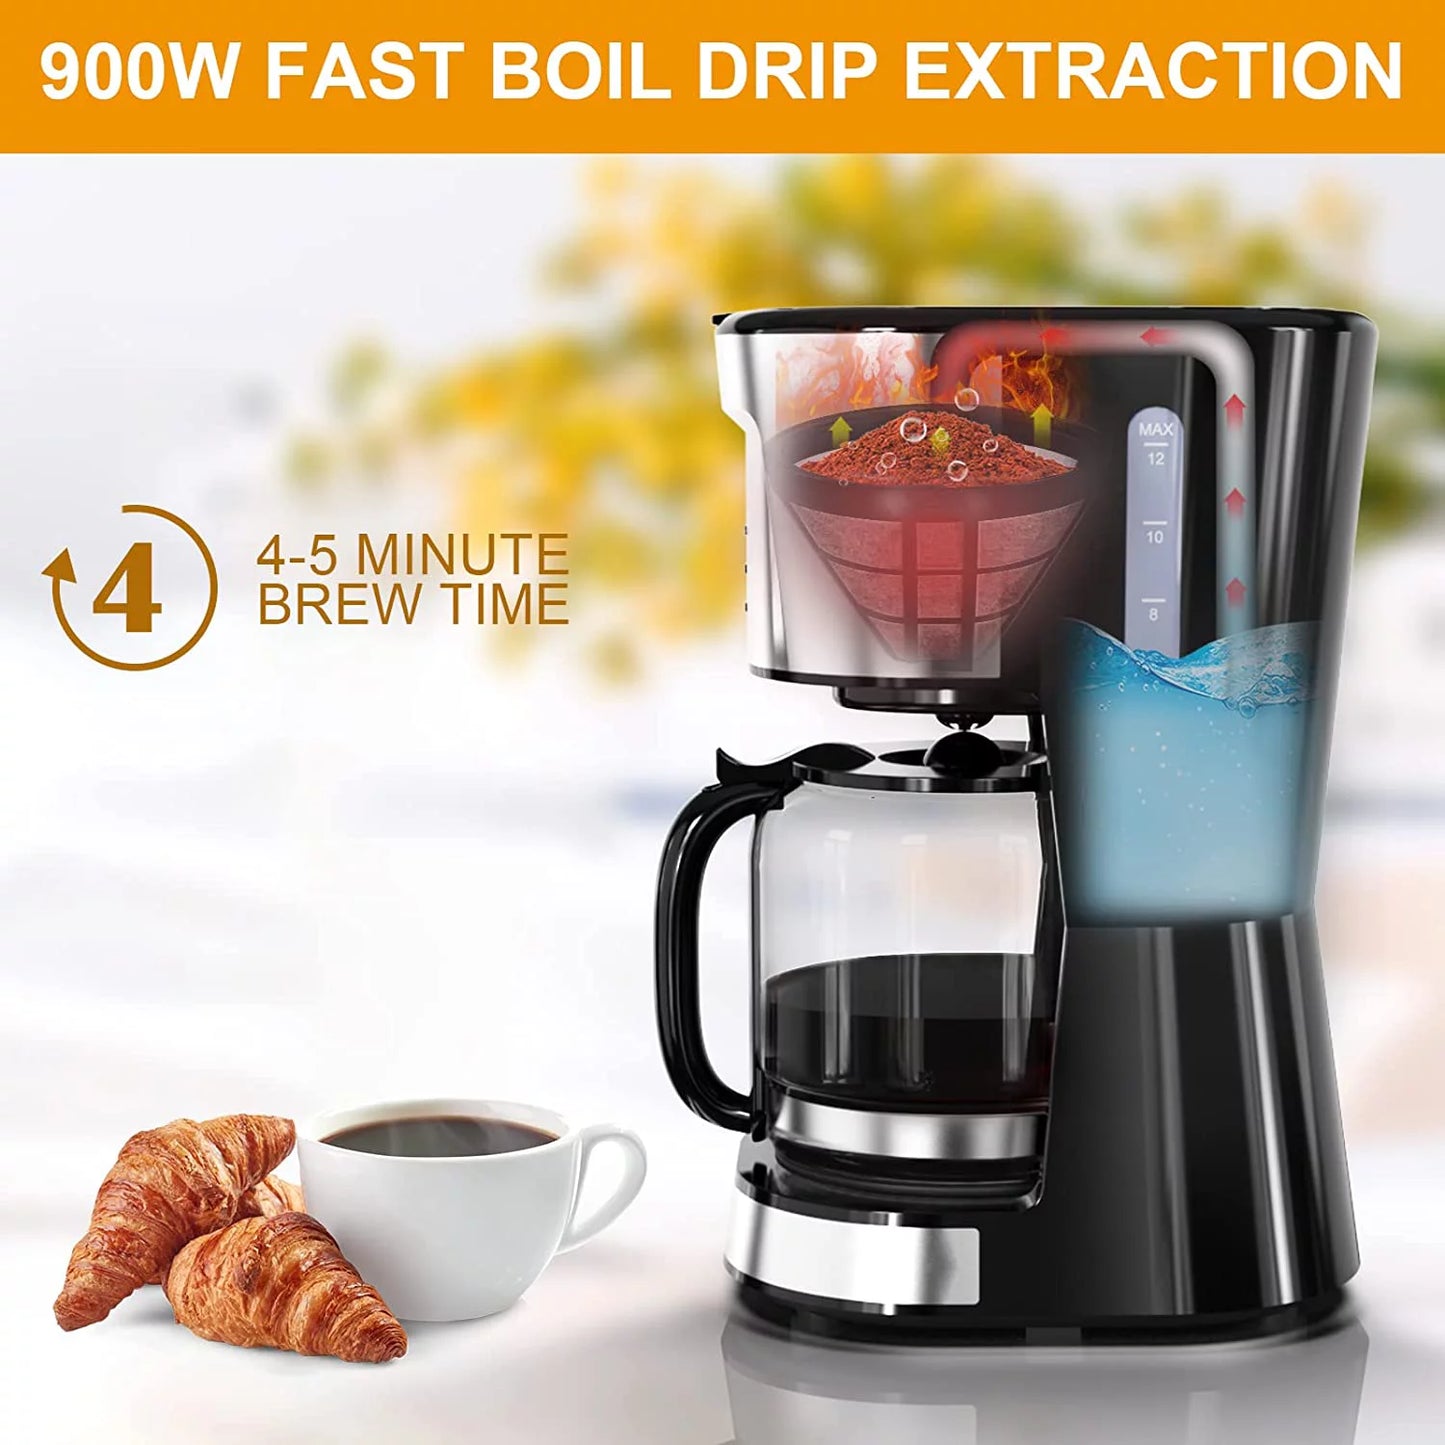 BOSCARE 12 Cup Programmable Coffee Maker, Drip Coffee Maker, Mini Coffee Machine with Auto Shut-off, Strength Control, Black & Silver - VANELC